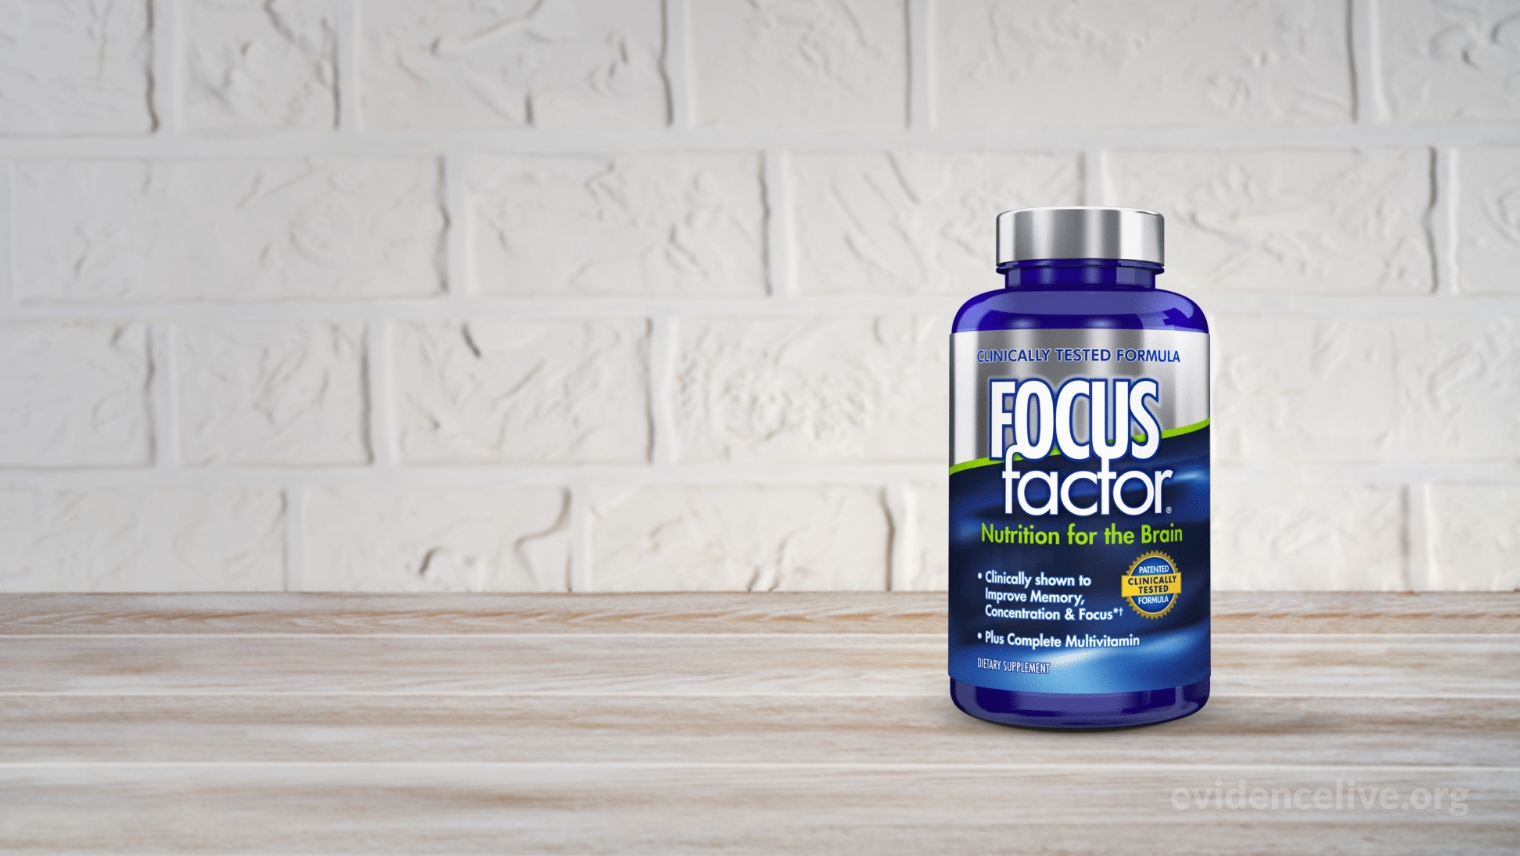 What is Focus Factor